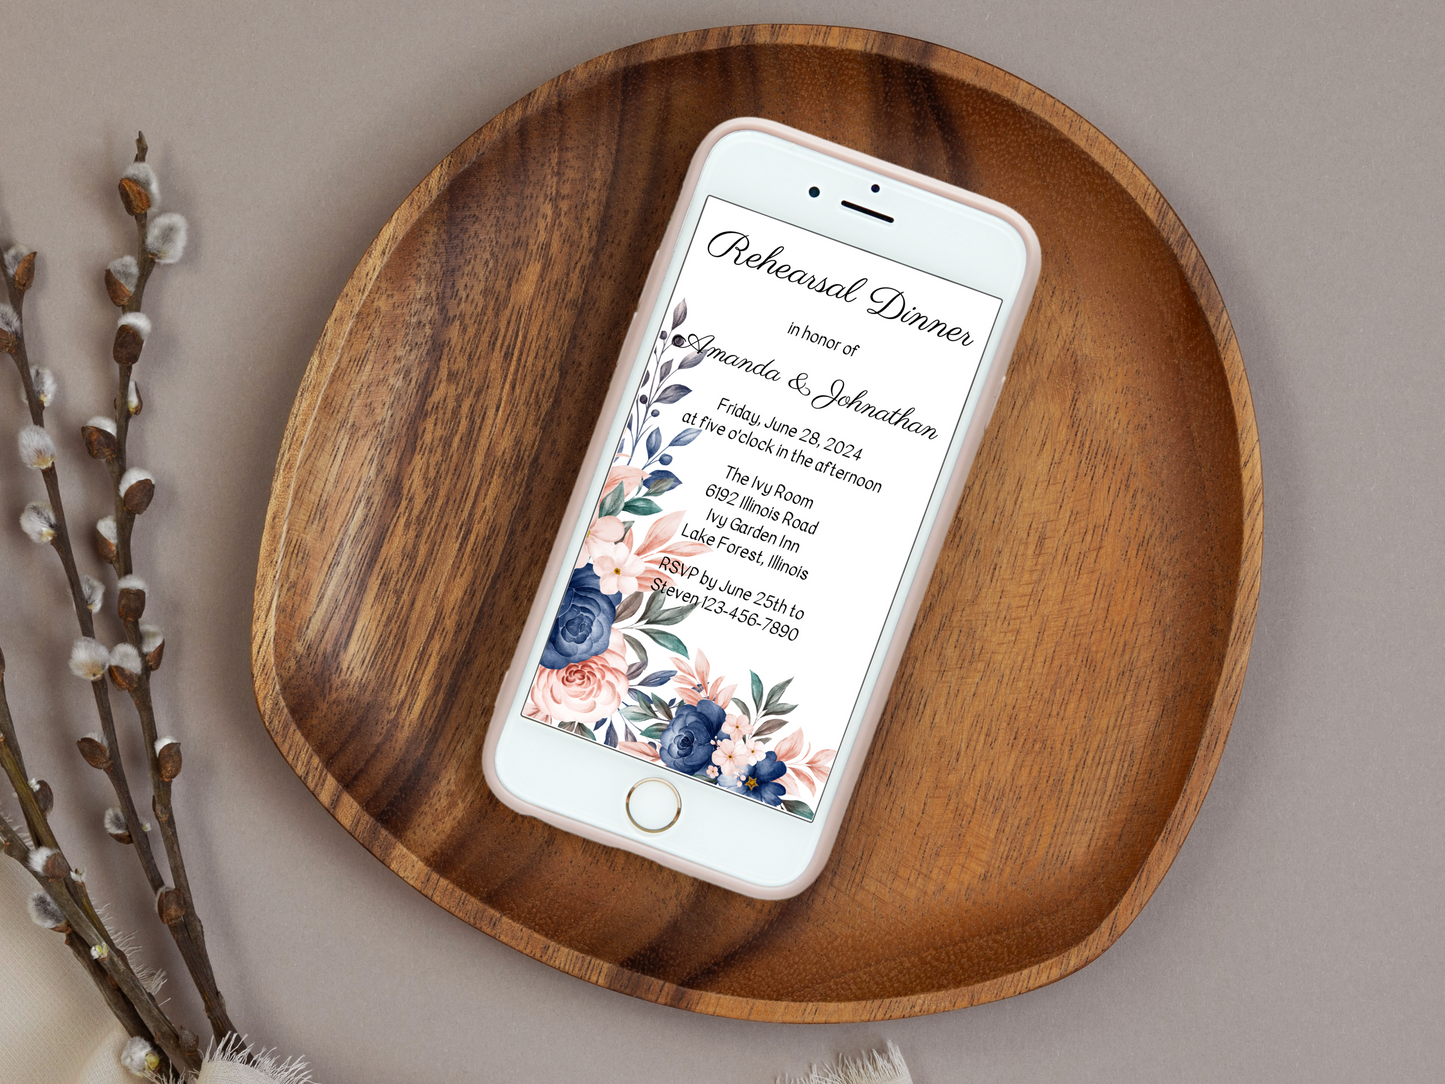 Pink & Blue Floral Wedding Rehearsal Dinner Invitation Templates, Printable & Digital Templates